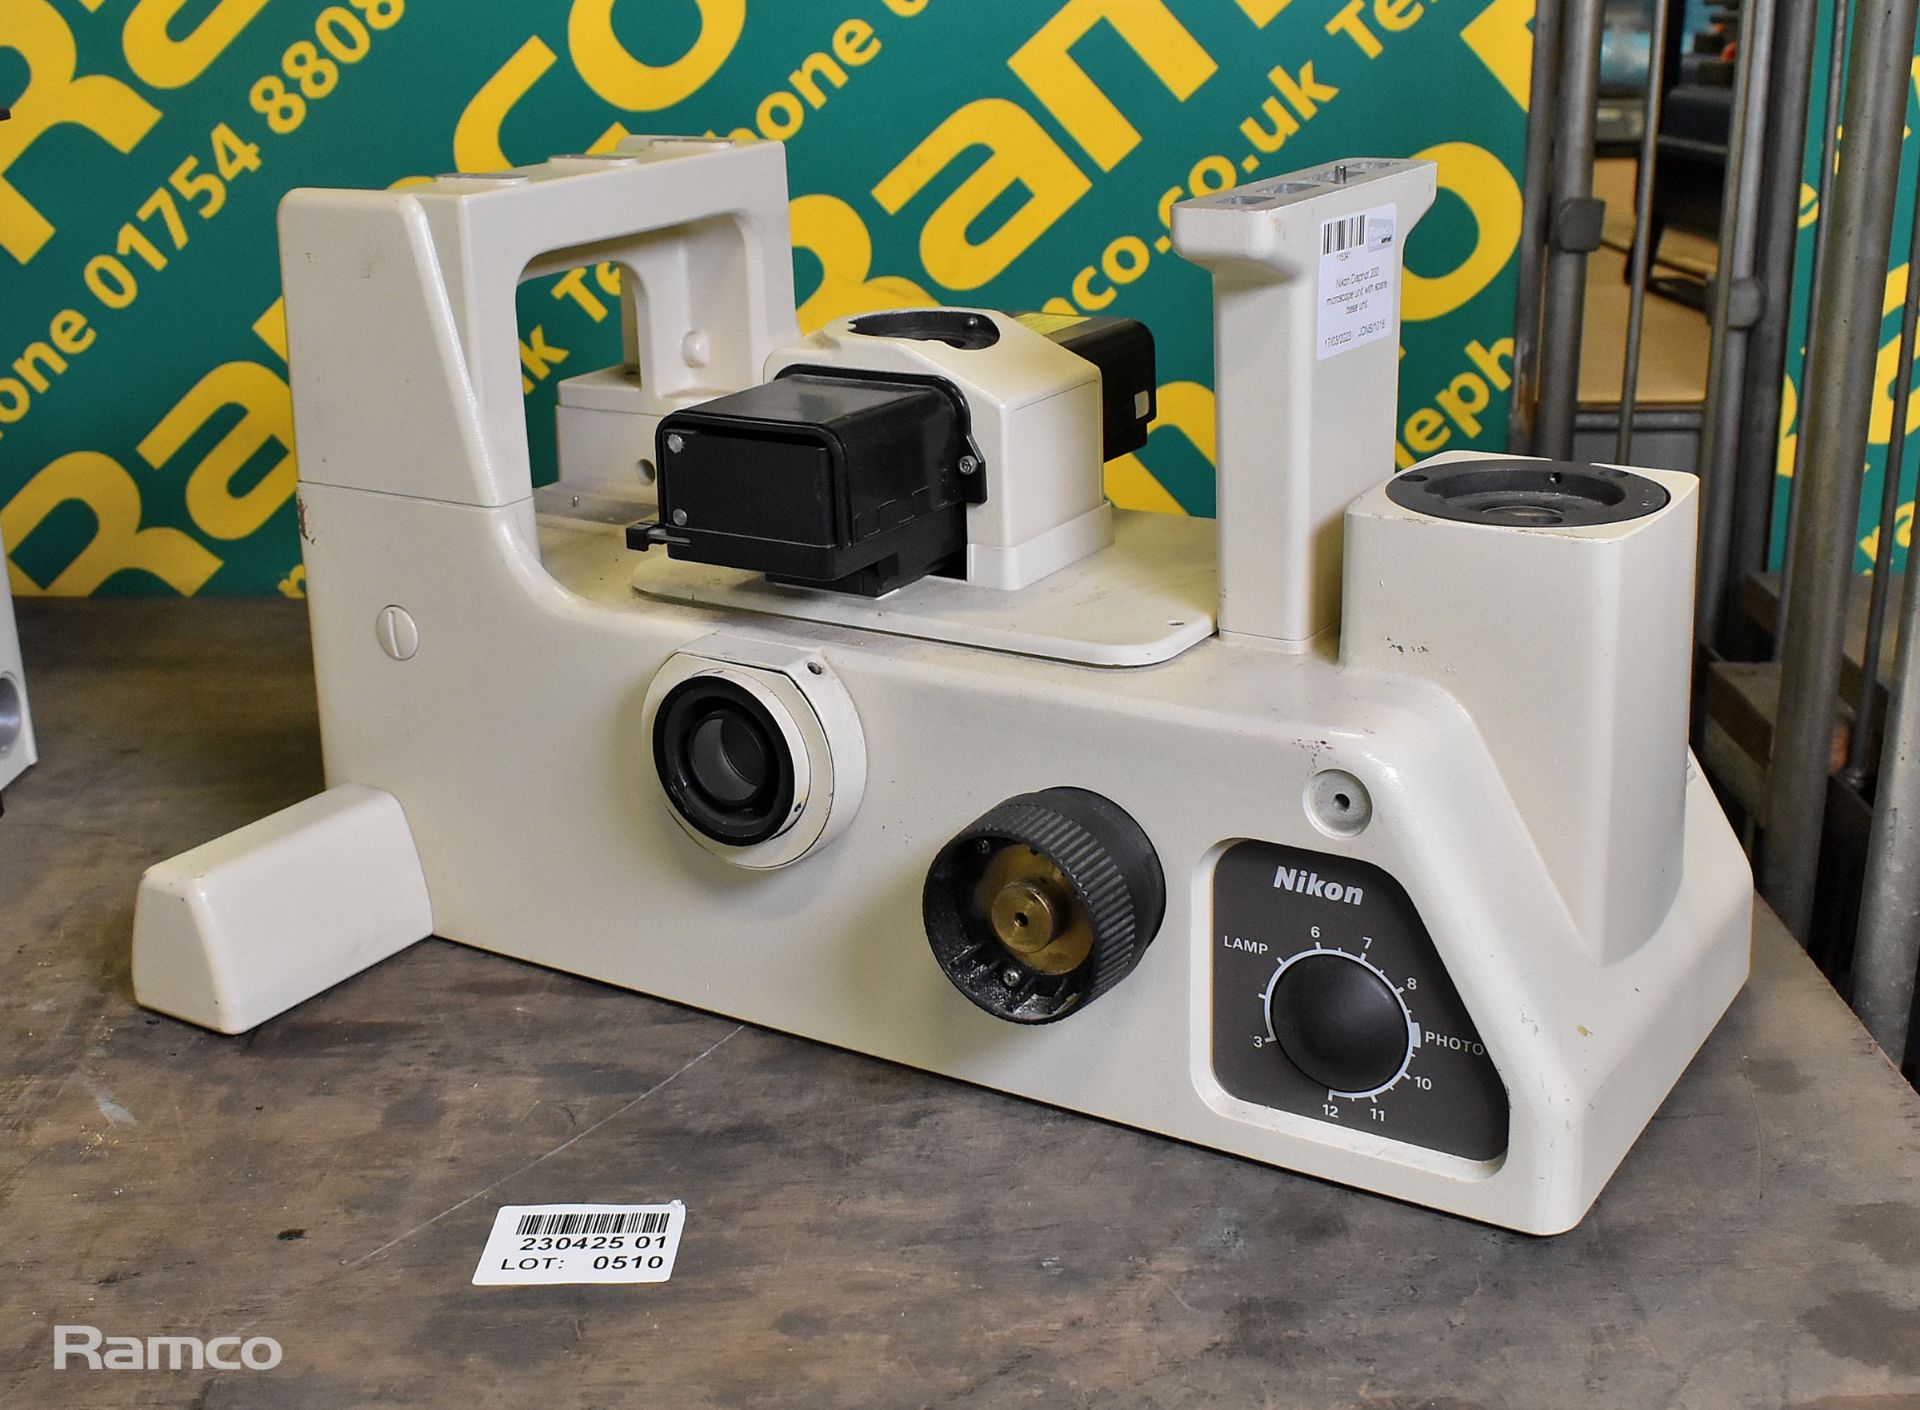 Nikon Diaphot 200 microscope unit with spare base unit - Image 3 of 14